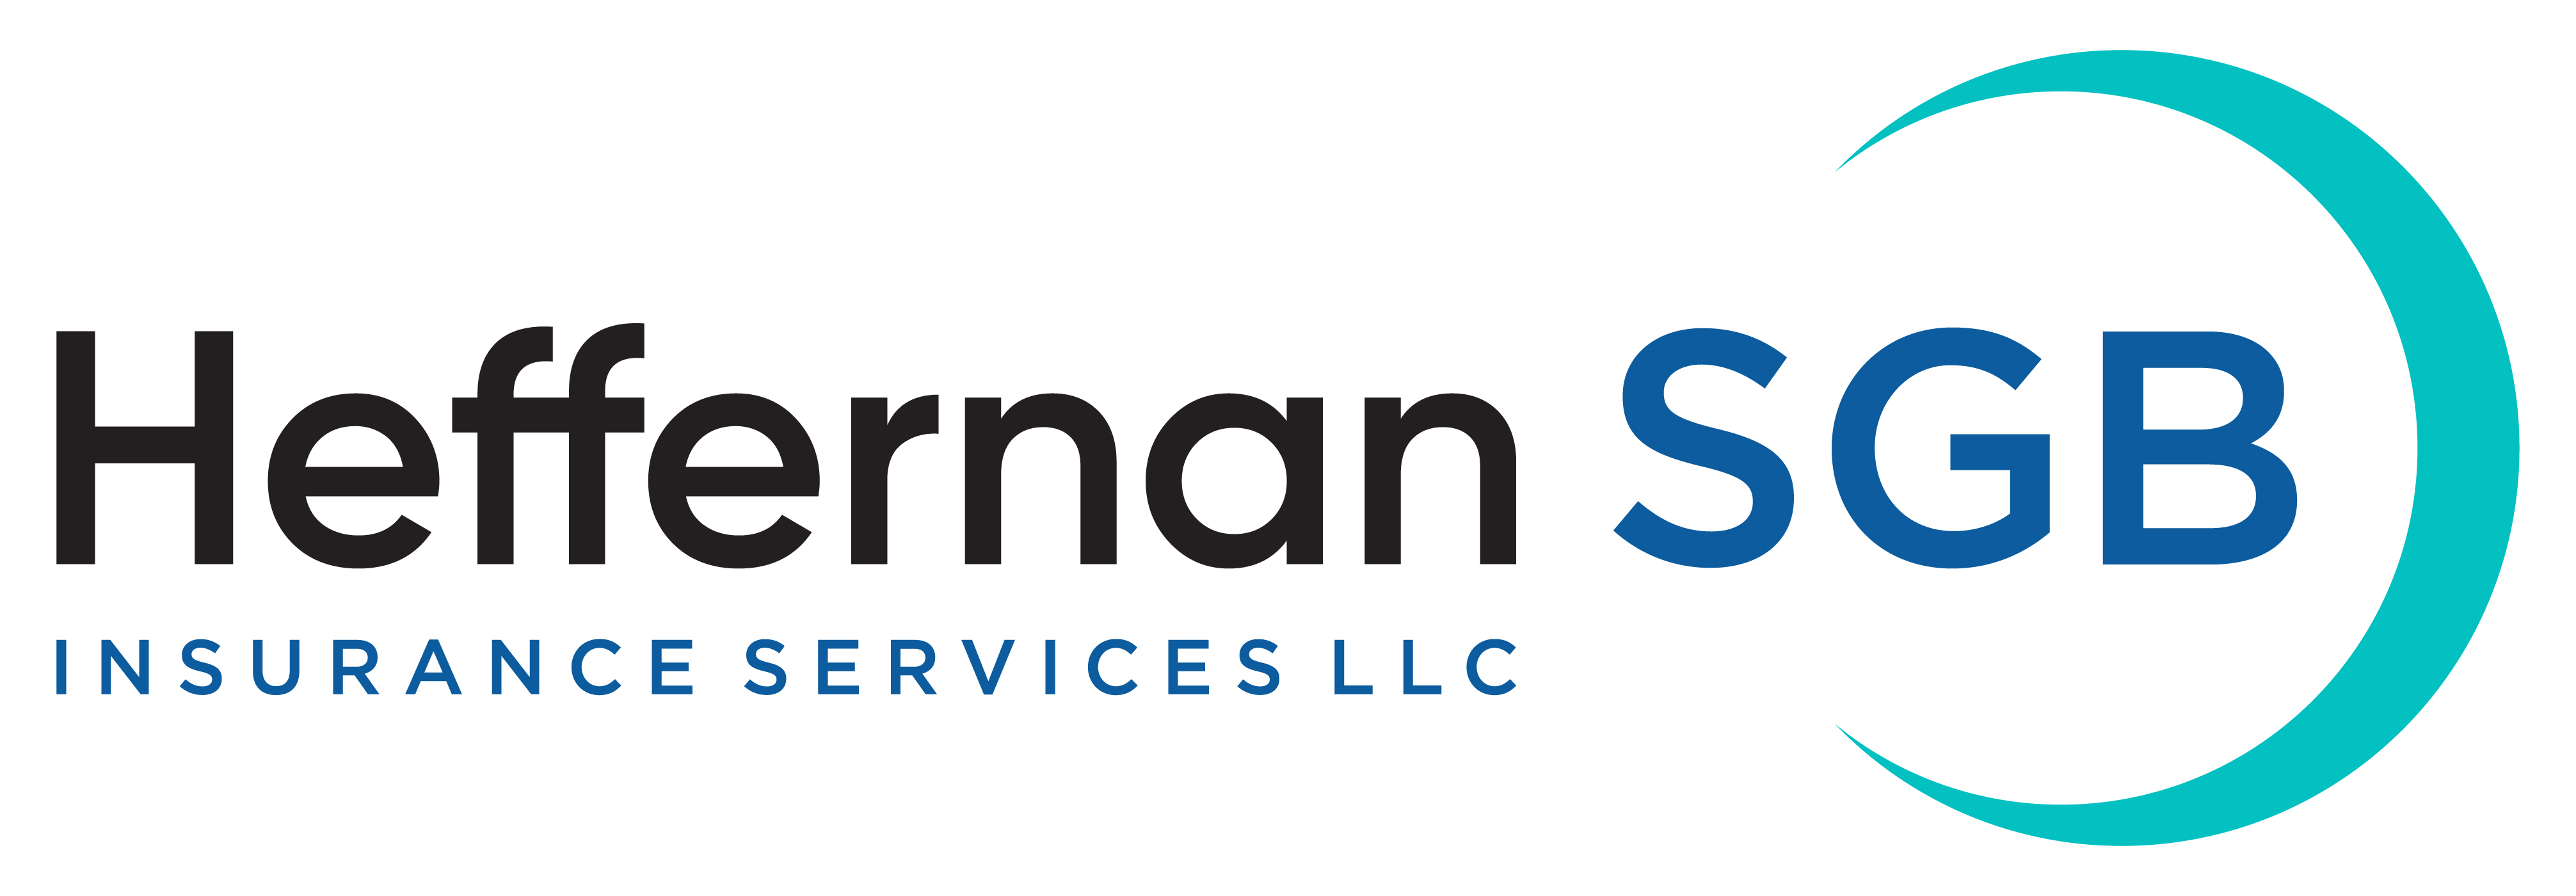 Heffernan SGB Insurance Services LLC